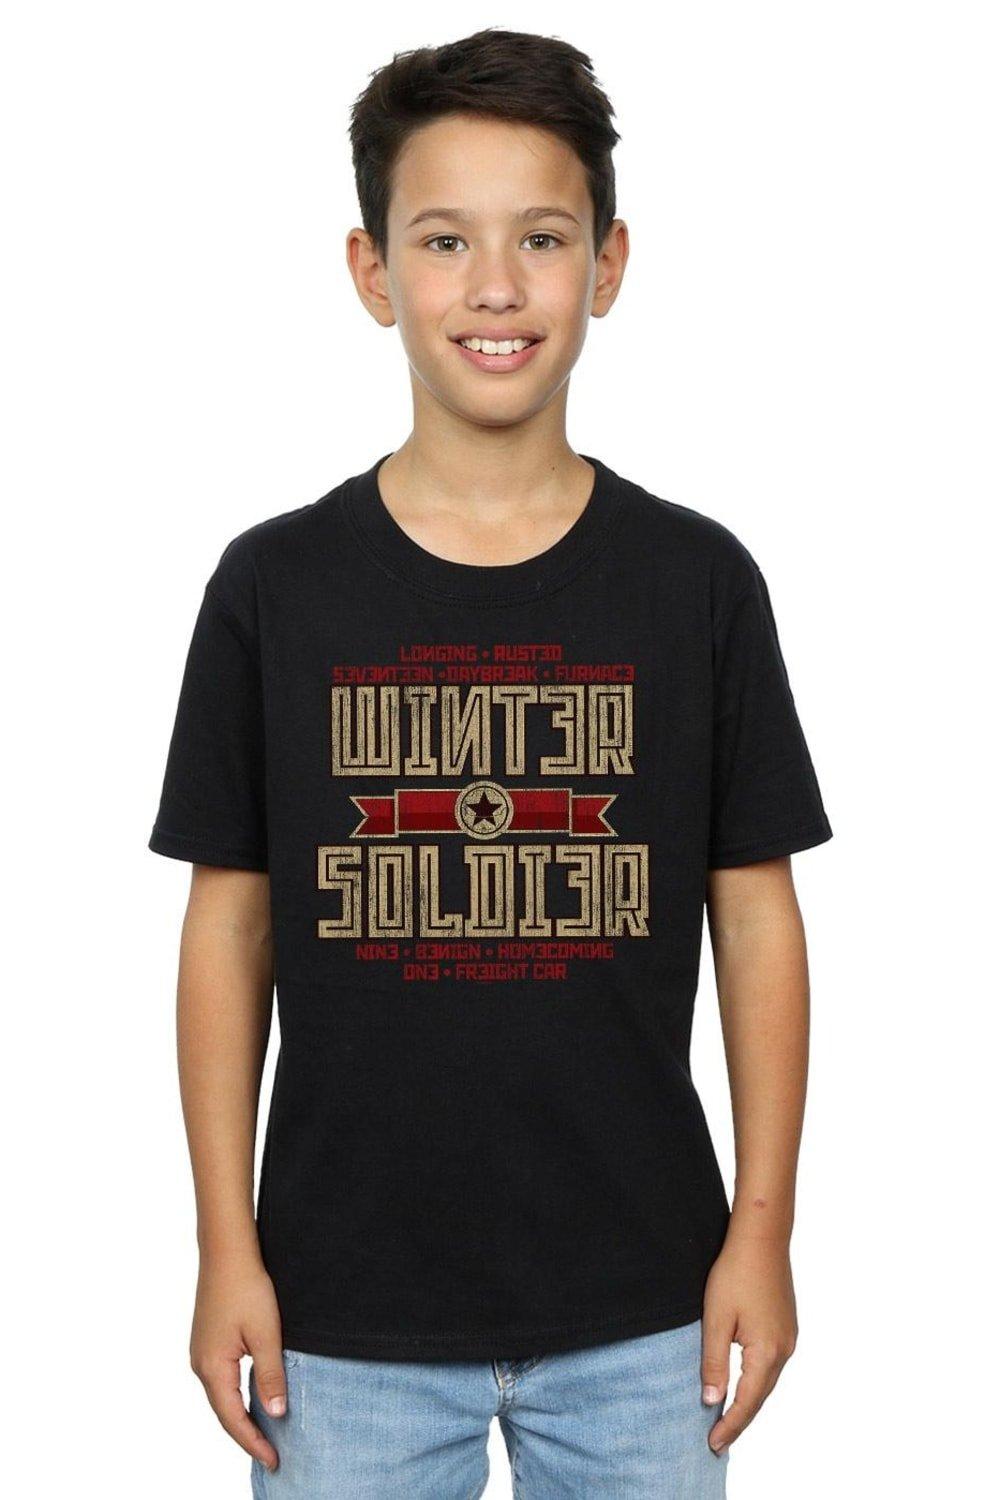 Winter Soldier Trigger Badge T-Shirt